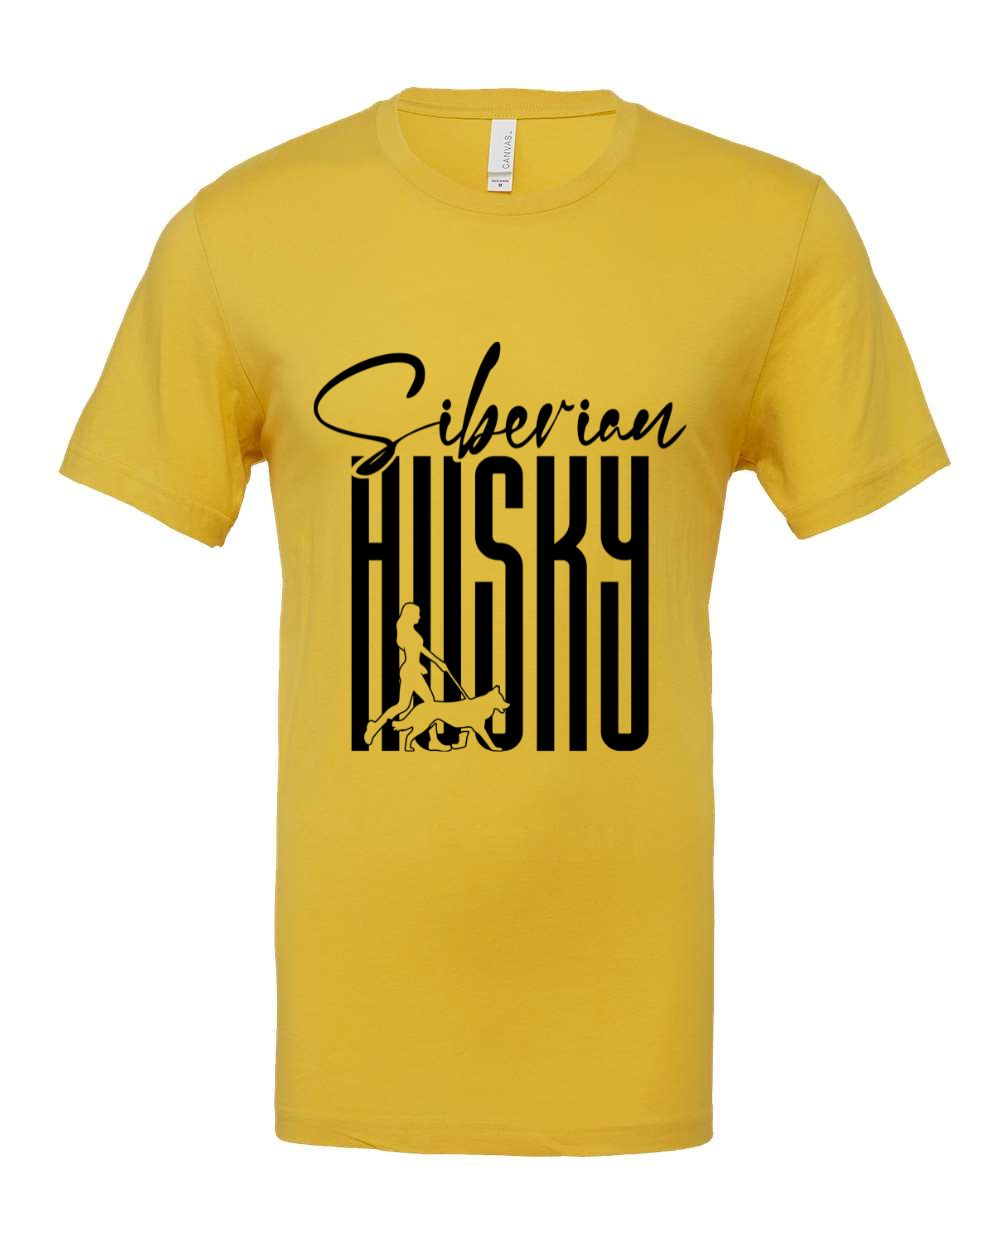 Siberrian Husky Dog Walking T-Shirt